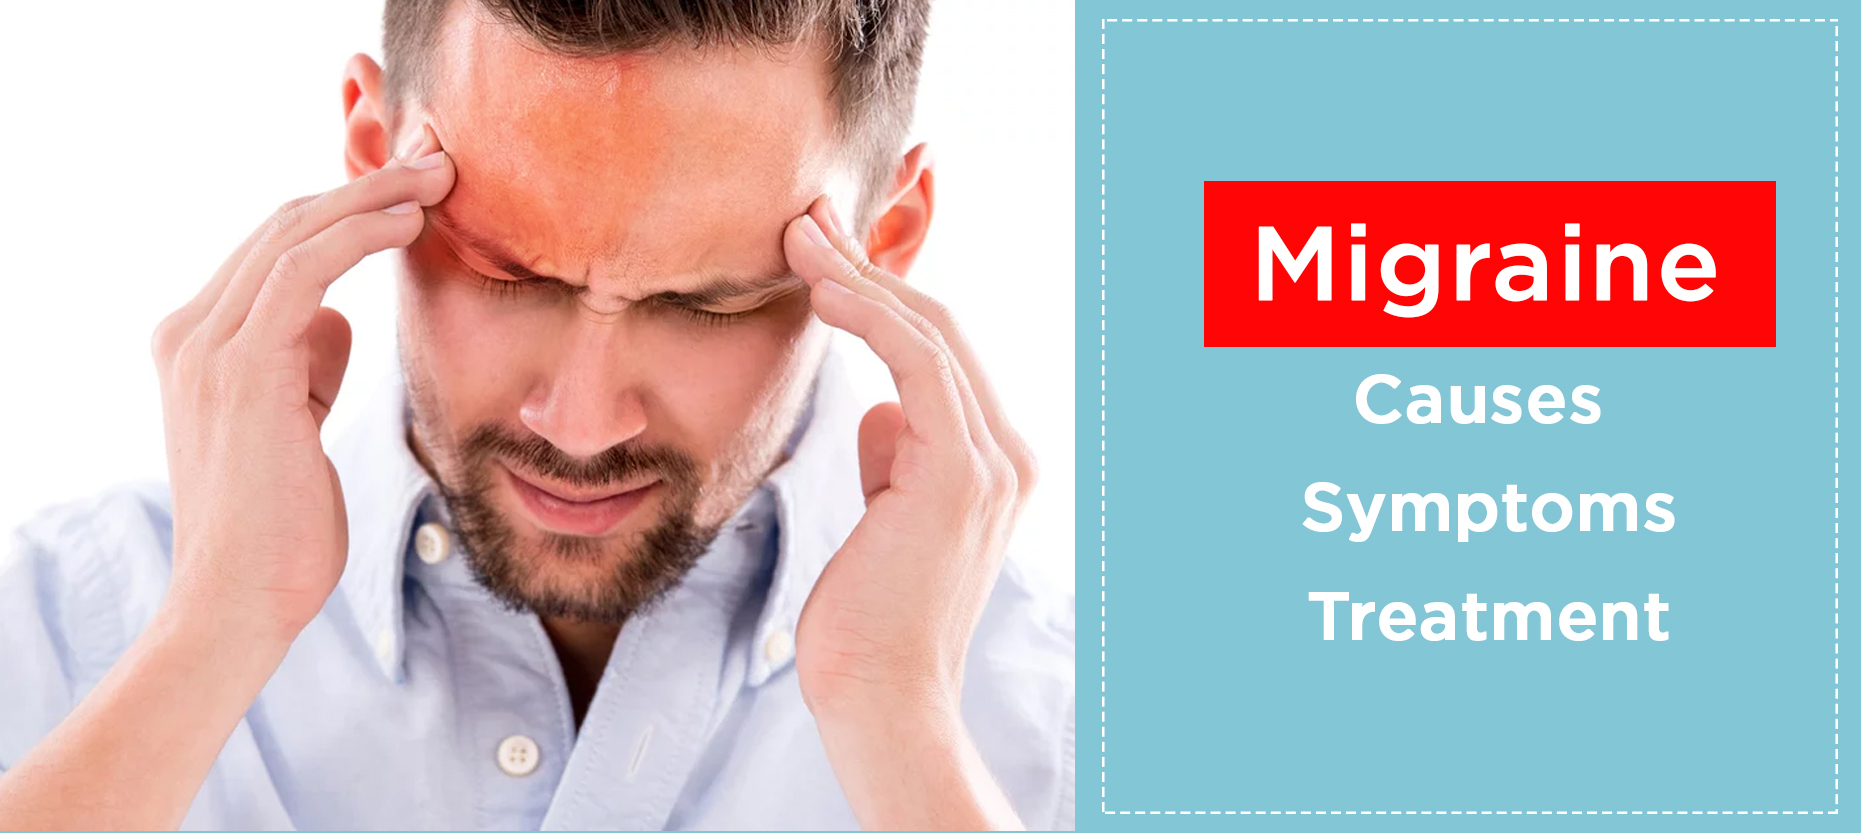 Migraine: Causes, symptoms, and Treatment